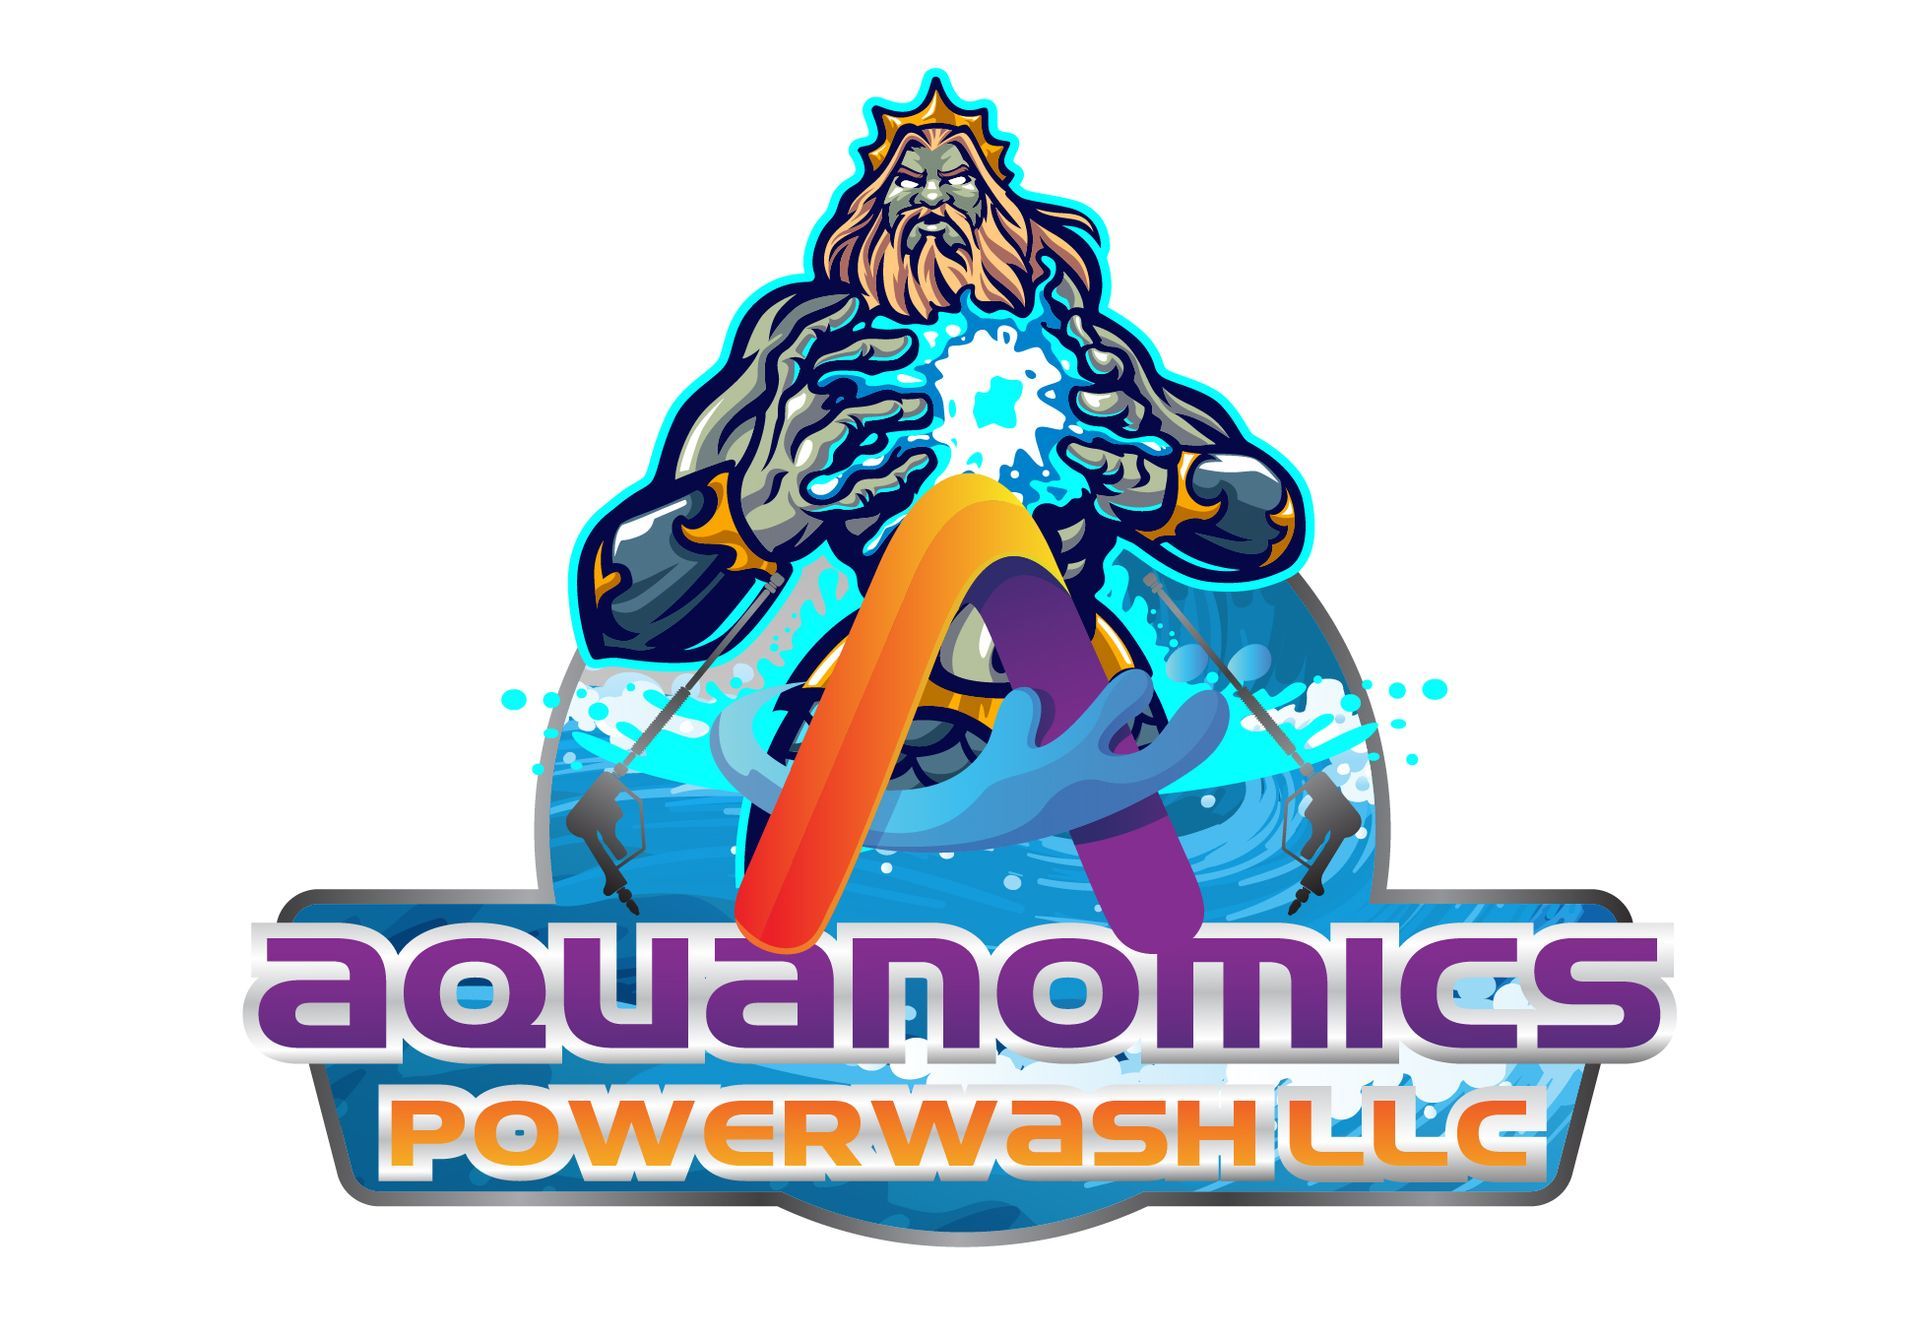 Aquanomics Powerwash LLC LOGO